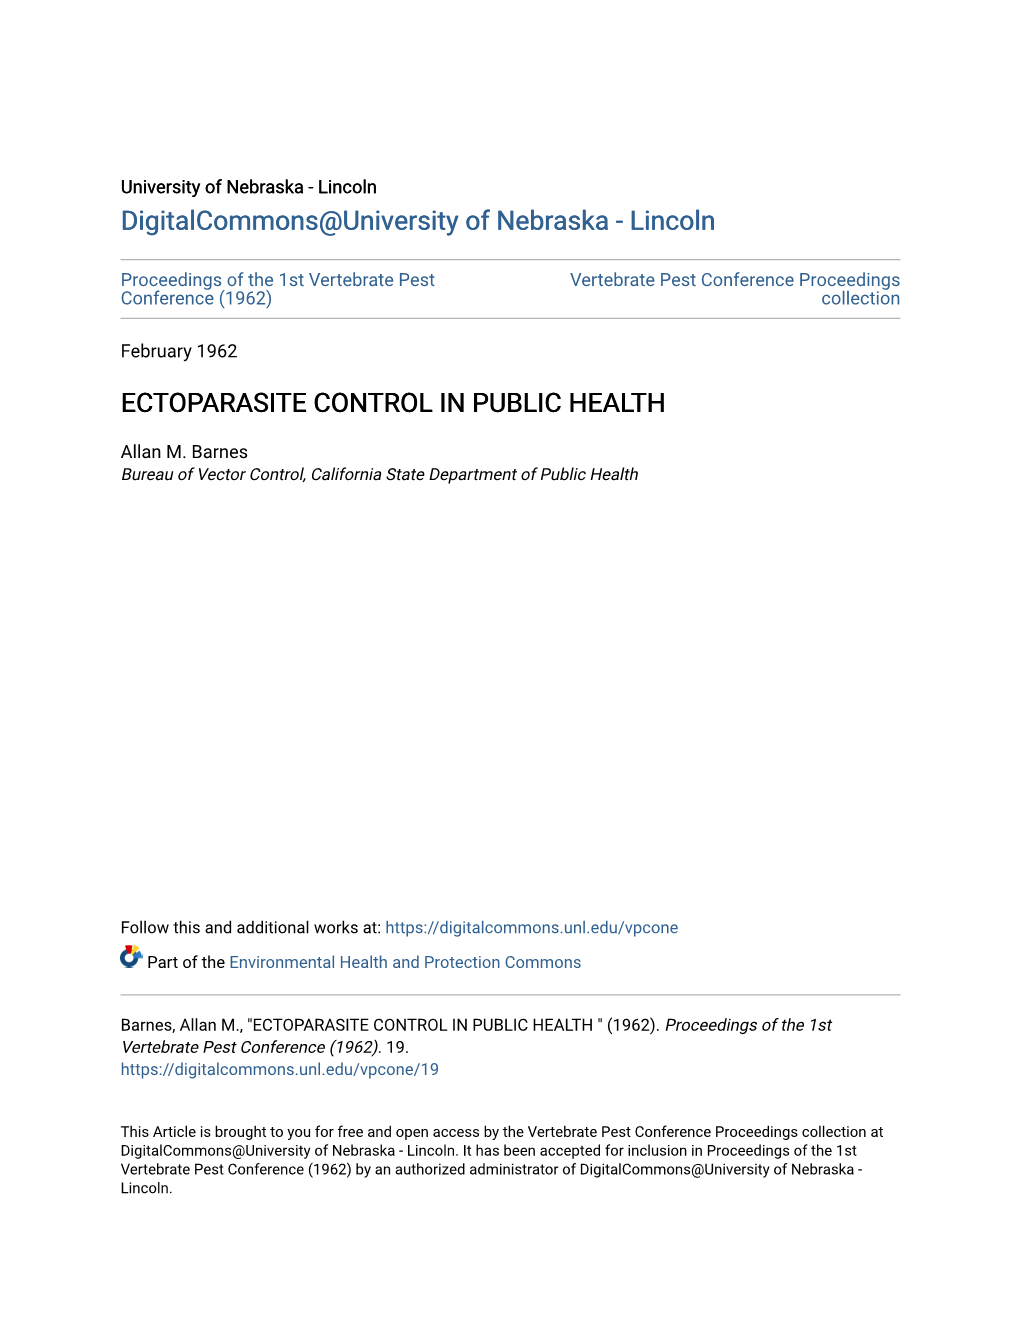 Ectoparasite Control in Public Health